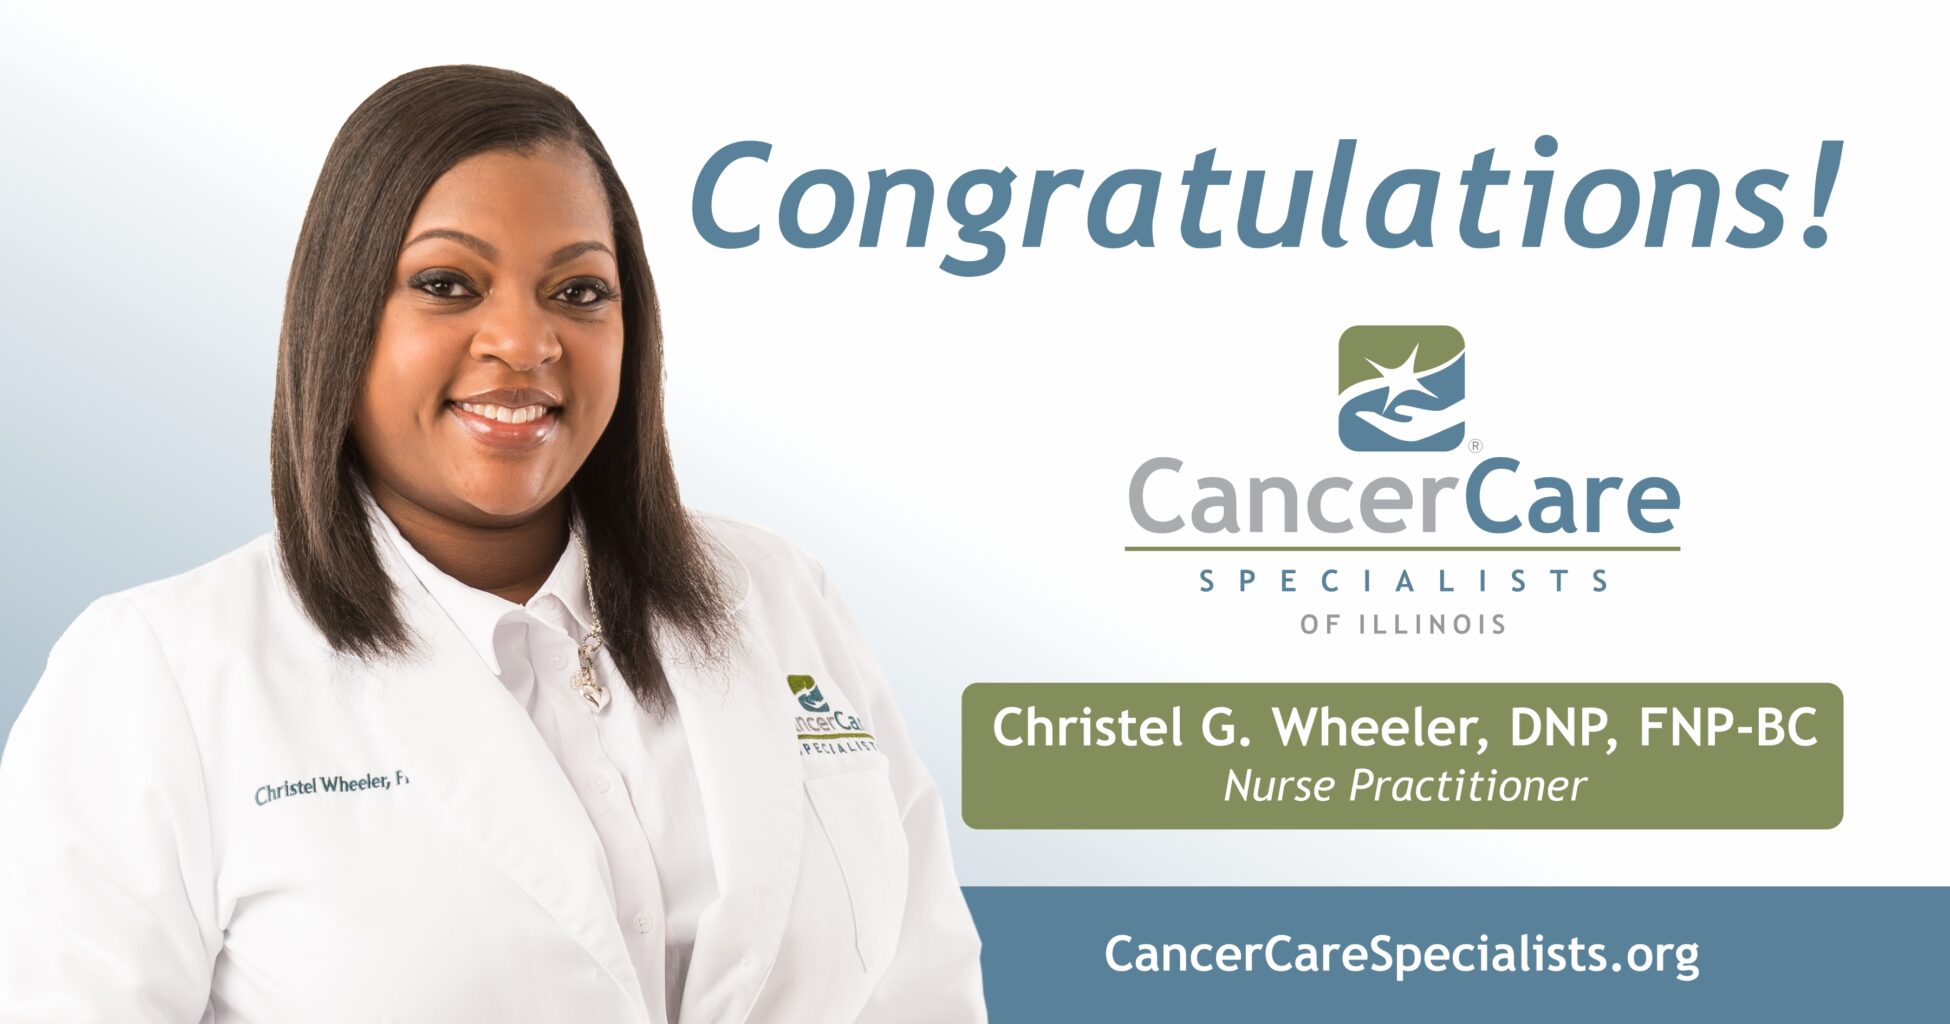 Congratulations, Christel!